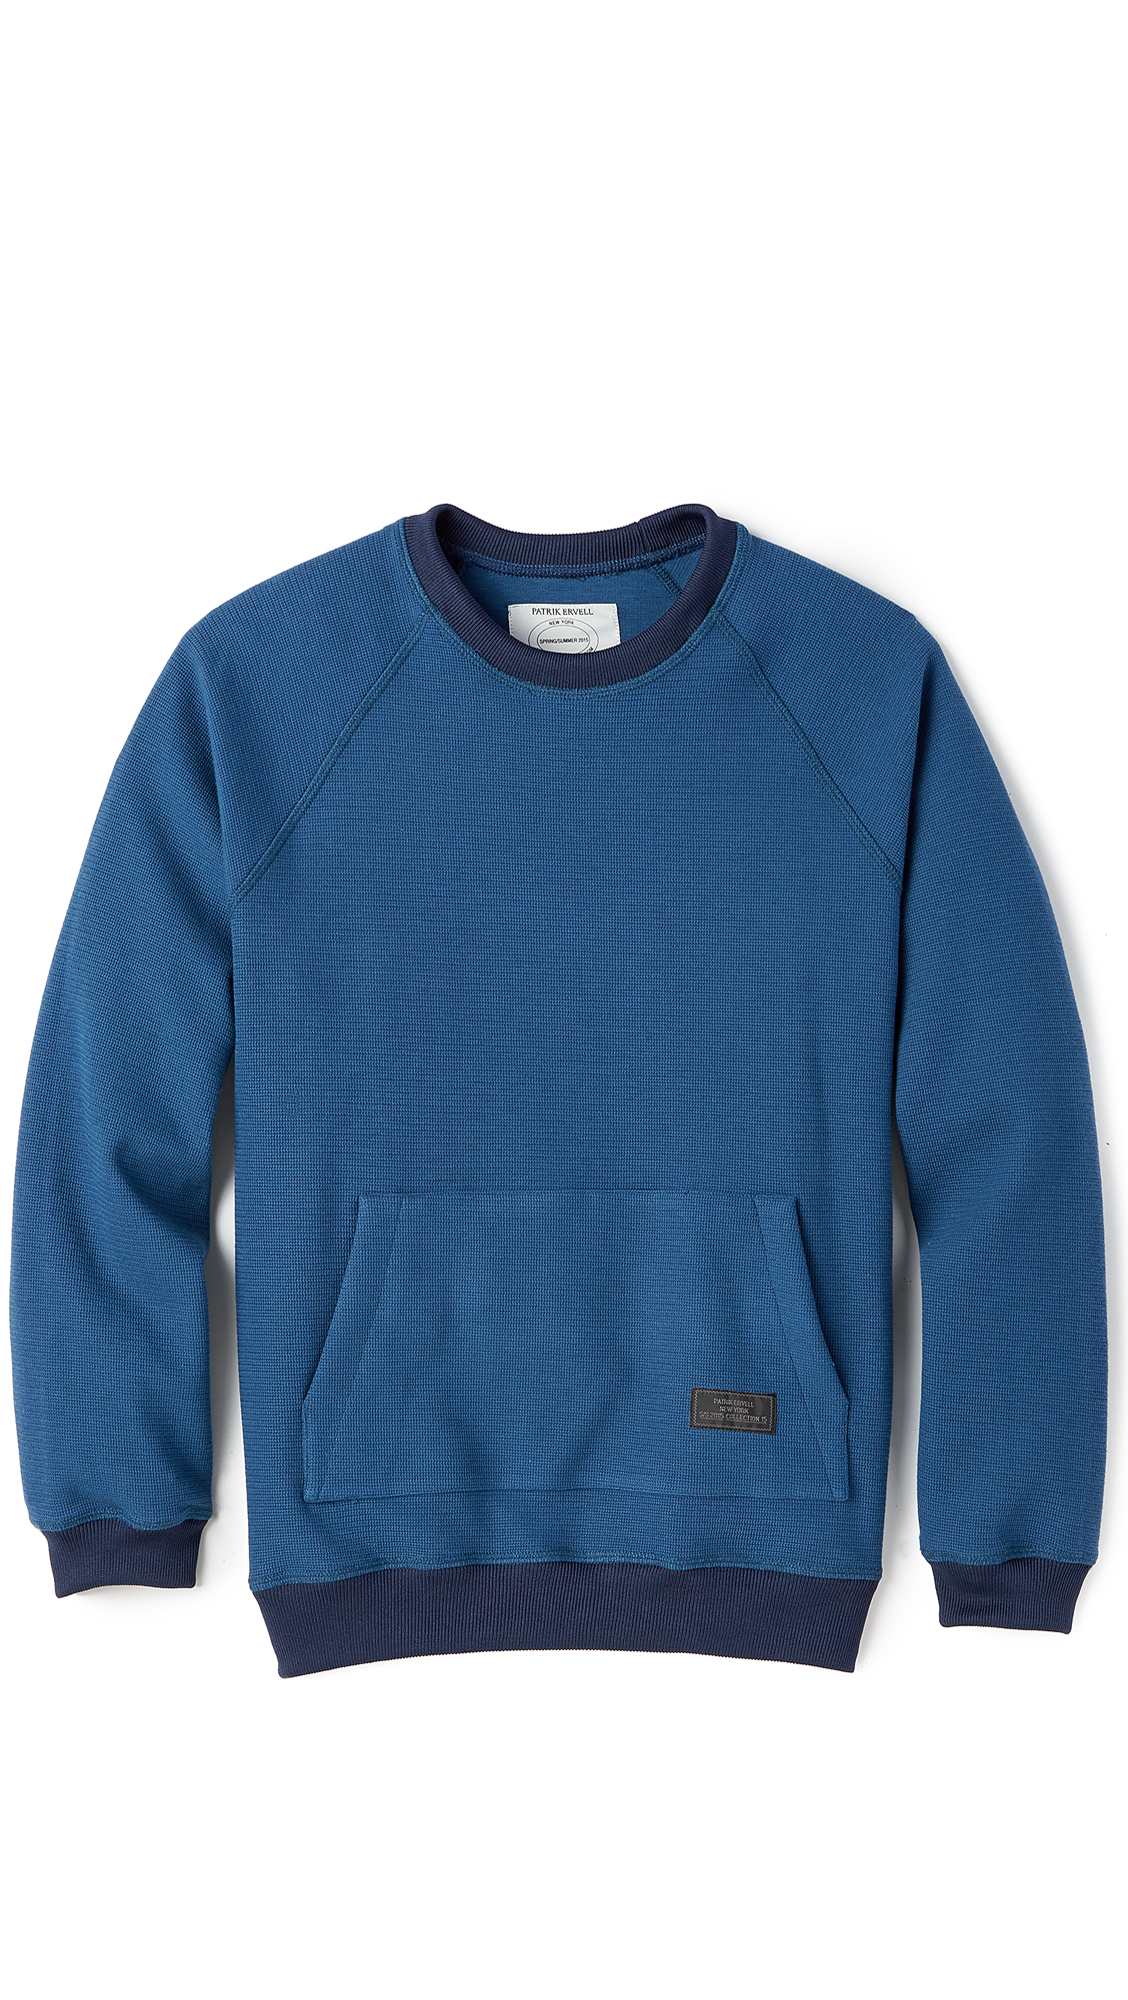 Lyst - Patrik Ervell Kangaroo Pocket Sweatshirt in Blue for Men